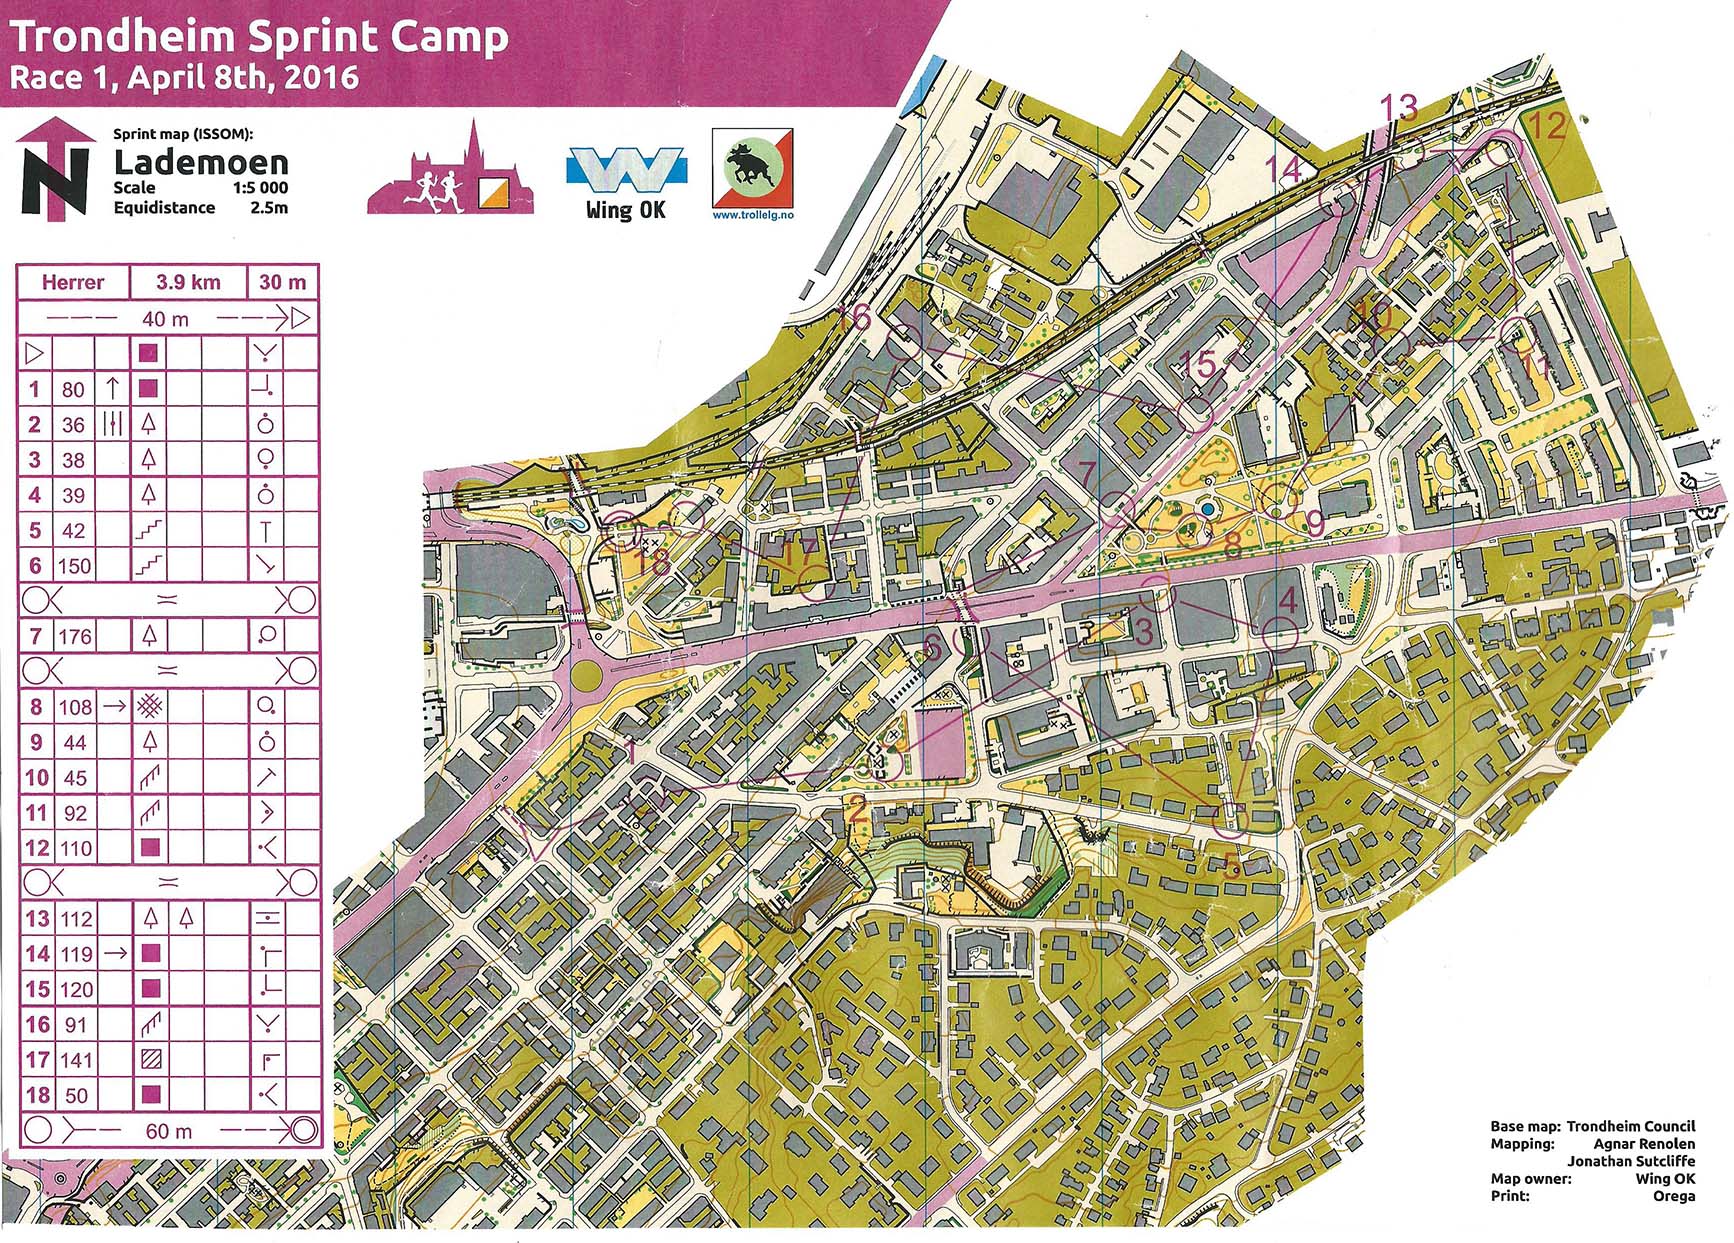 Trondheim Sprint Camp 1 (08/04/2016)